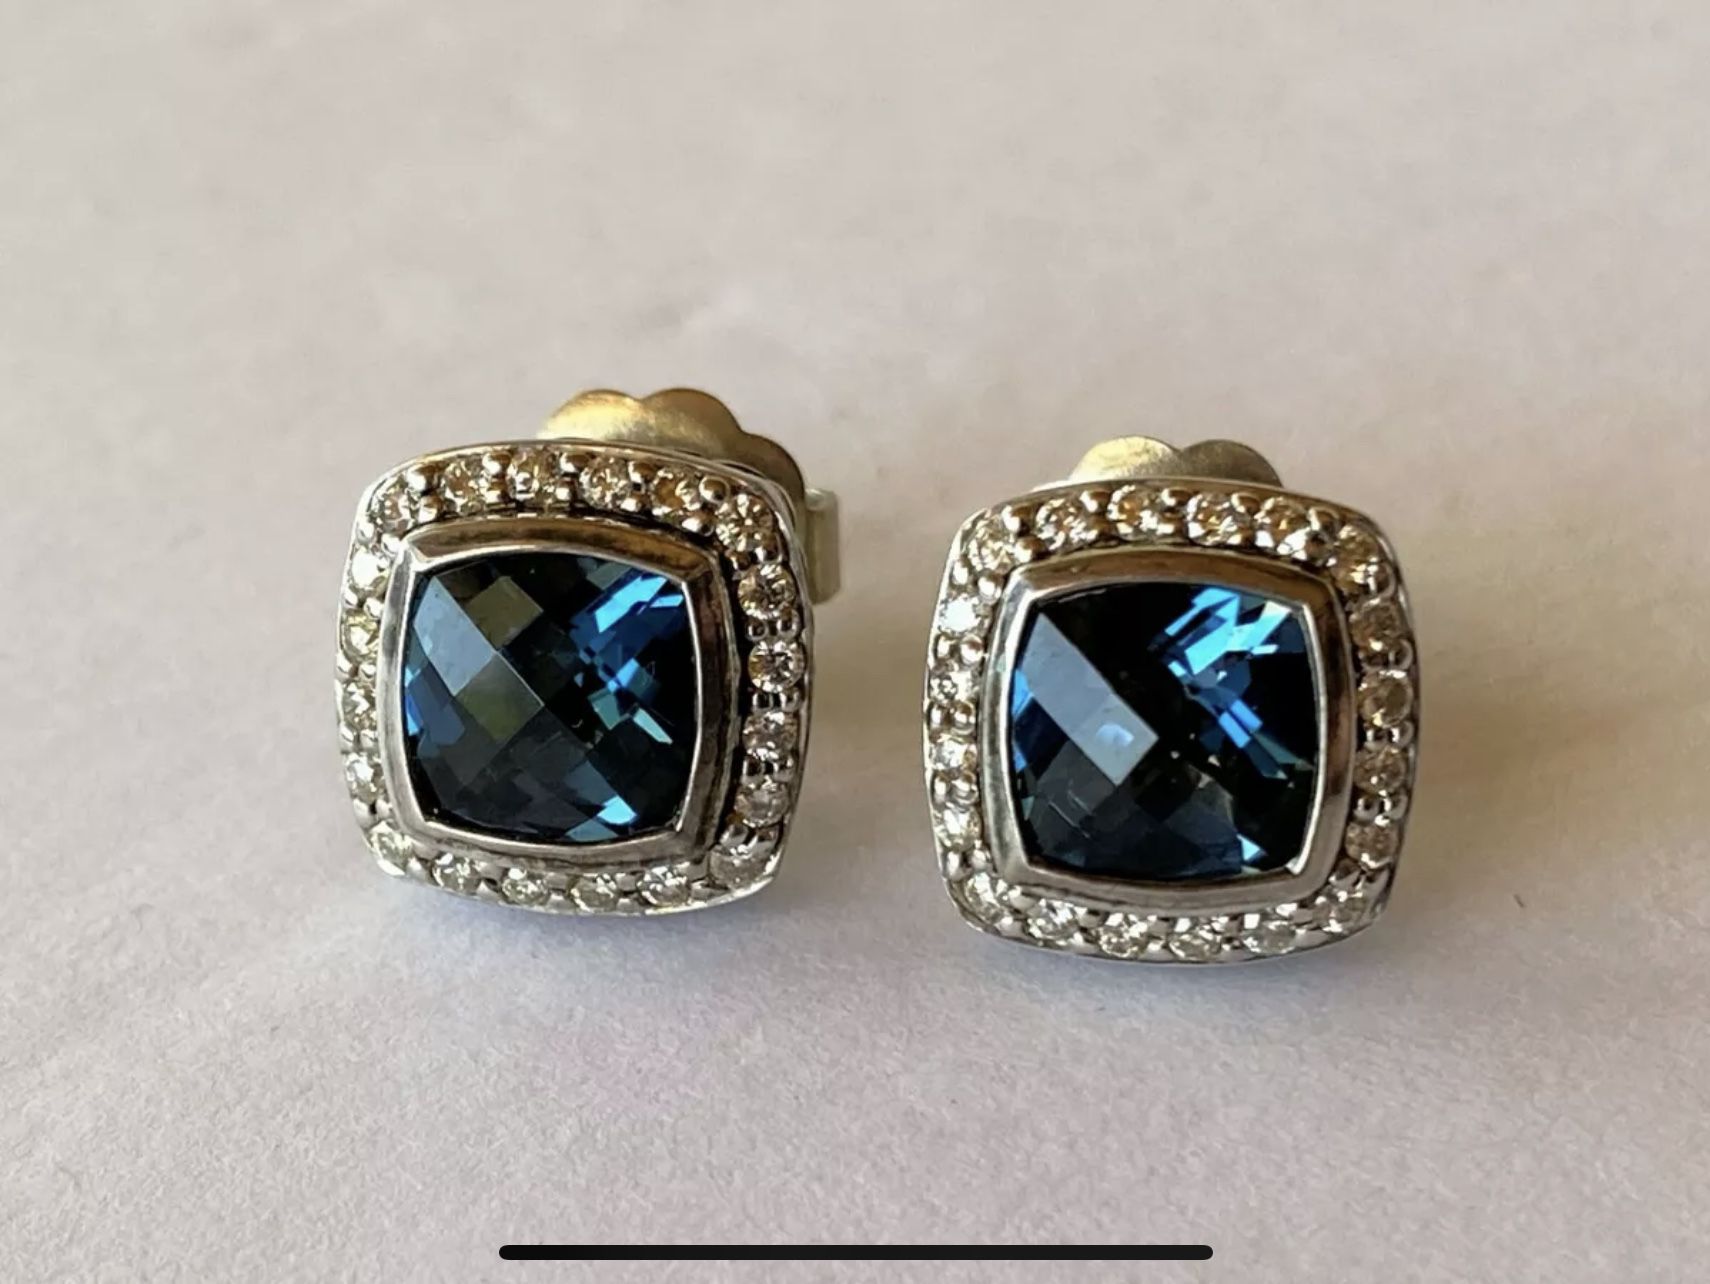 David Yurman Albion Petite Earrings with Blue Topaz and Diamonds, 7mm 